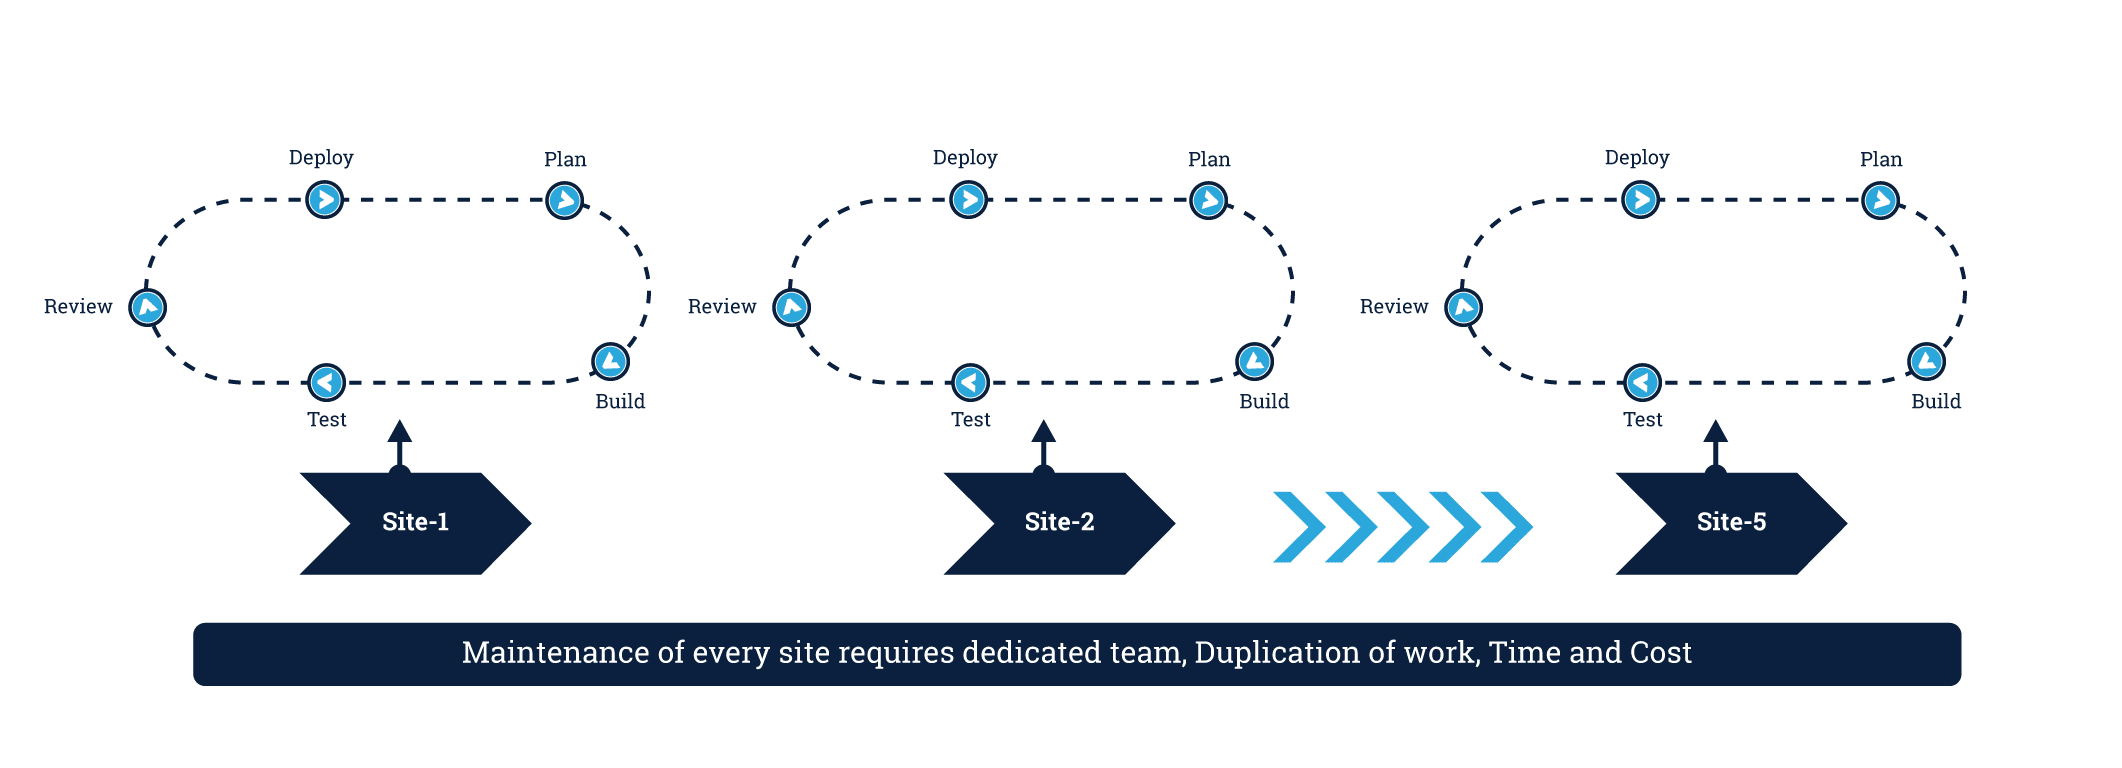 Work Duplication Cycle